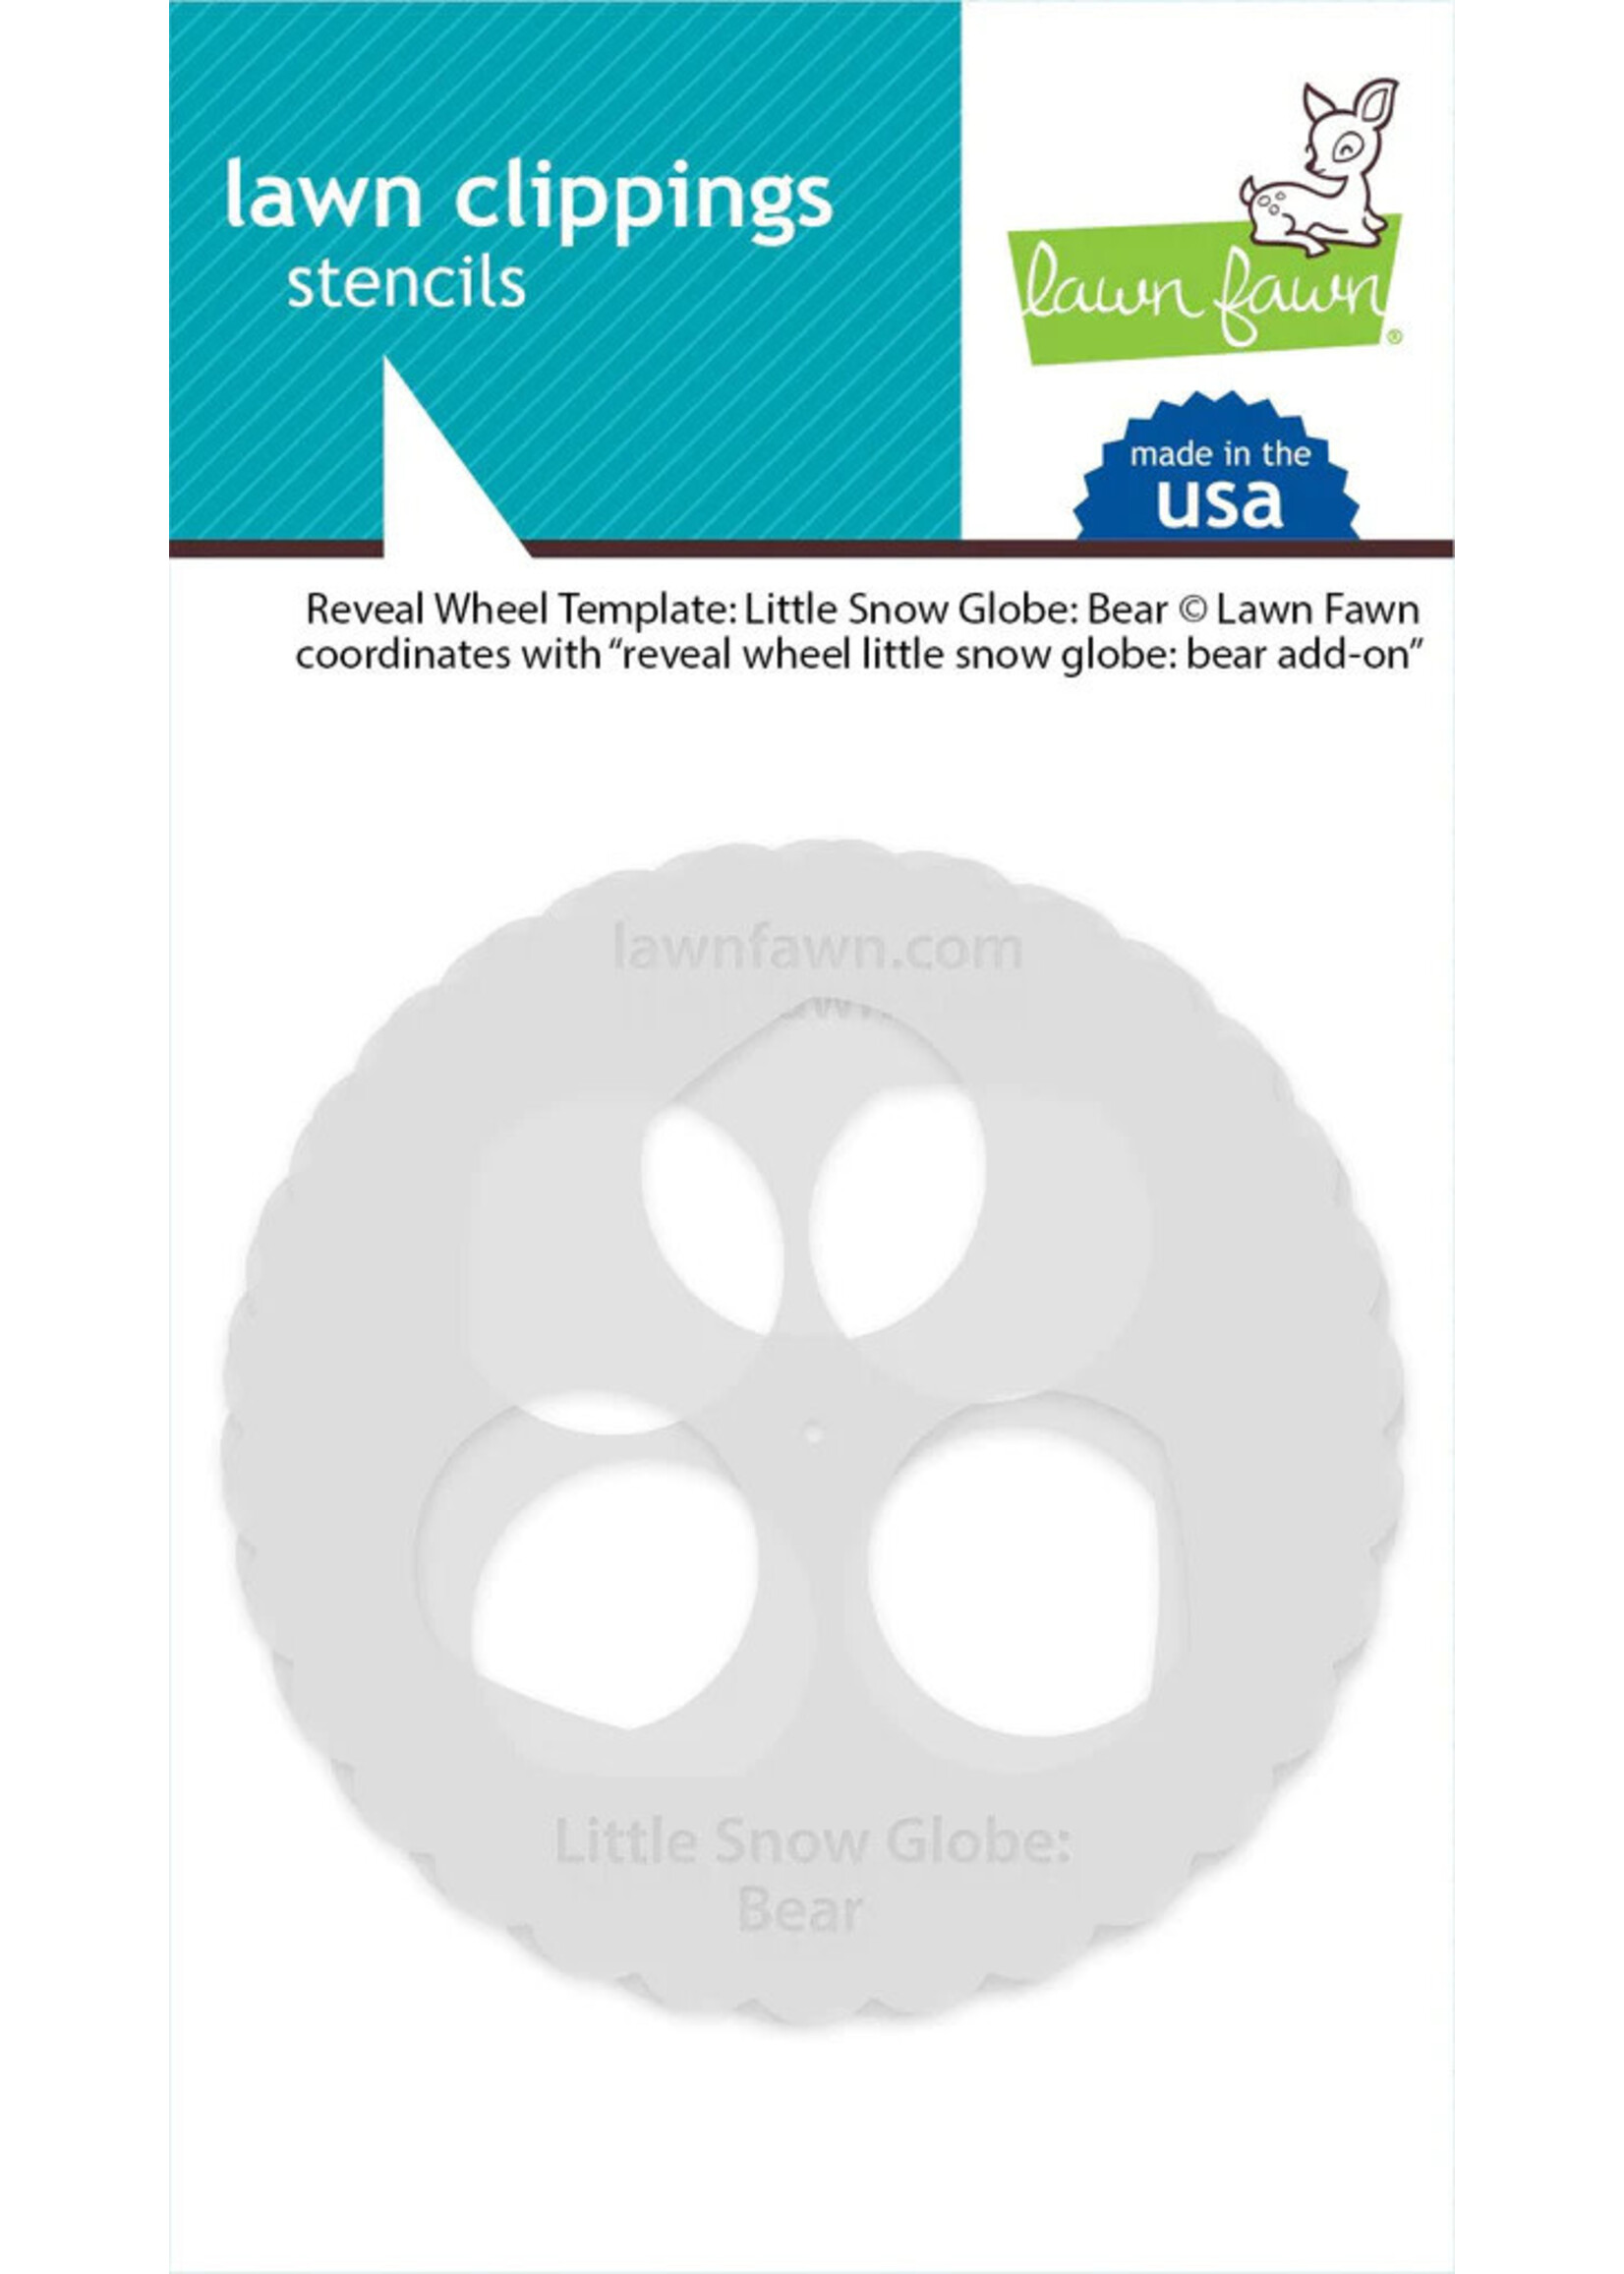 Lawn Fawn reveal wheel templates: little snow globe: bear